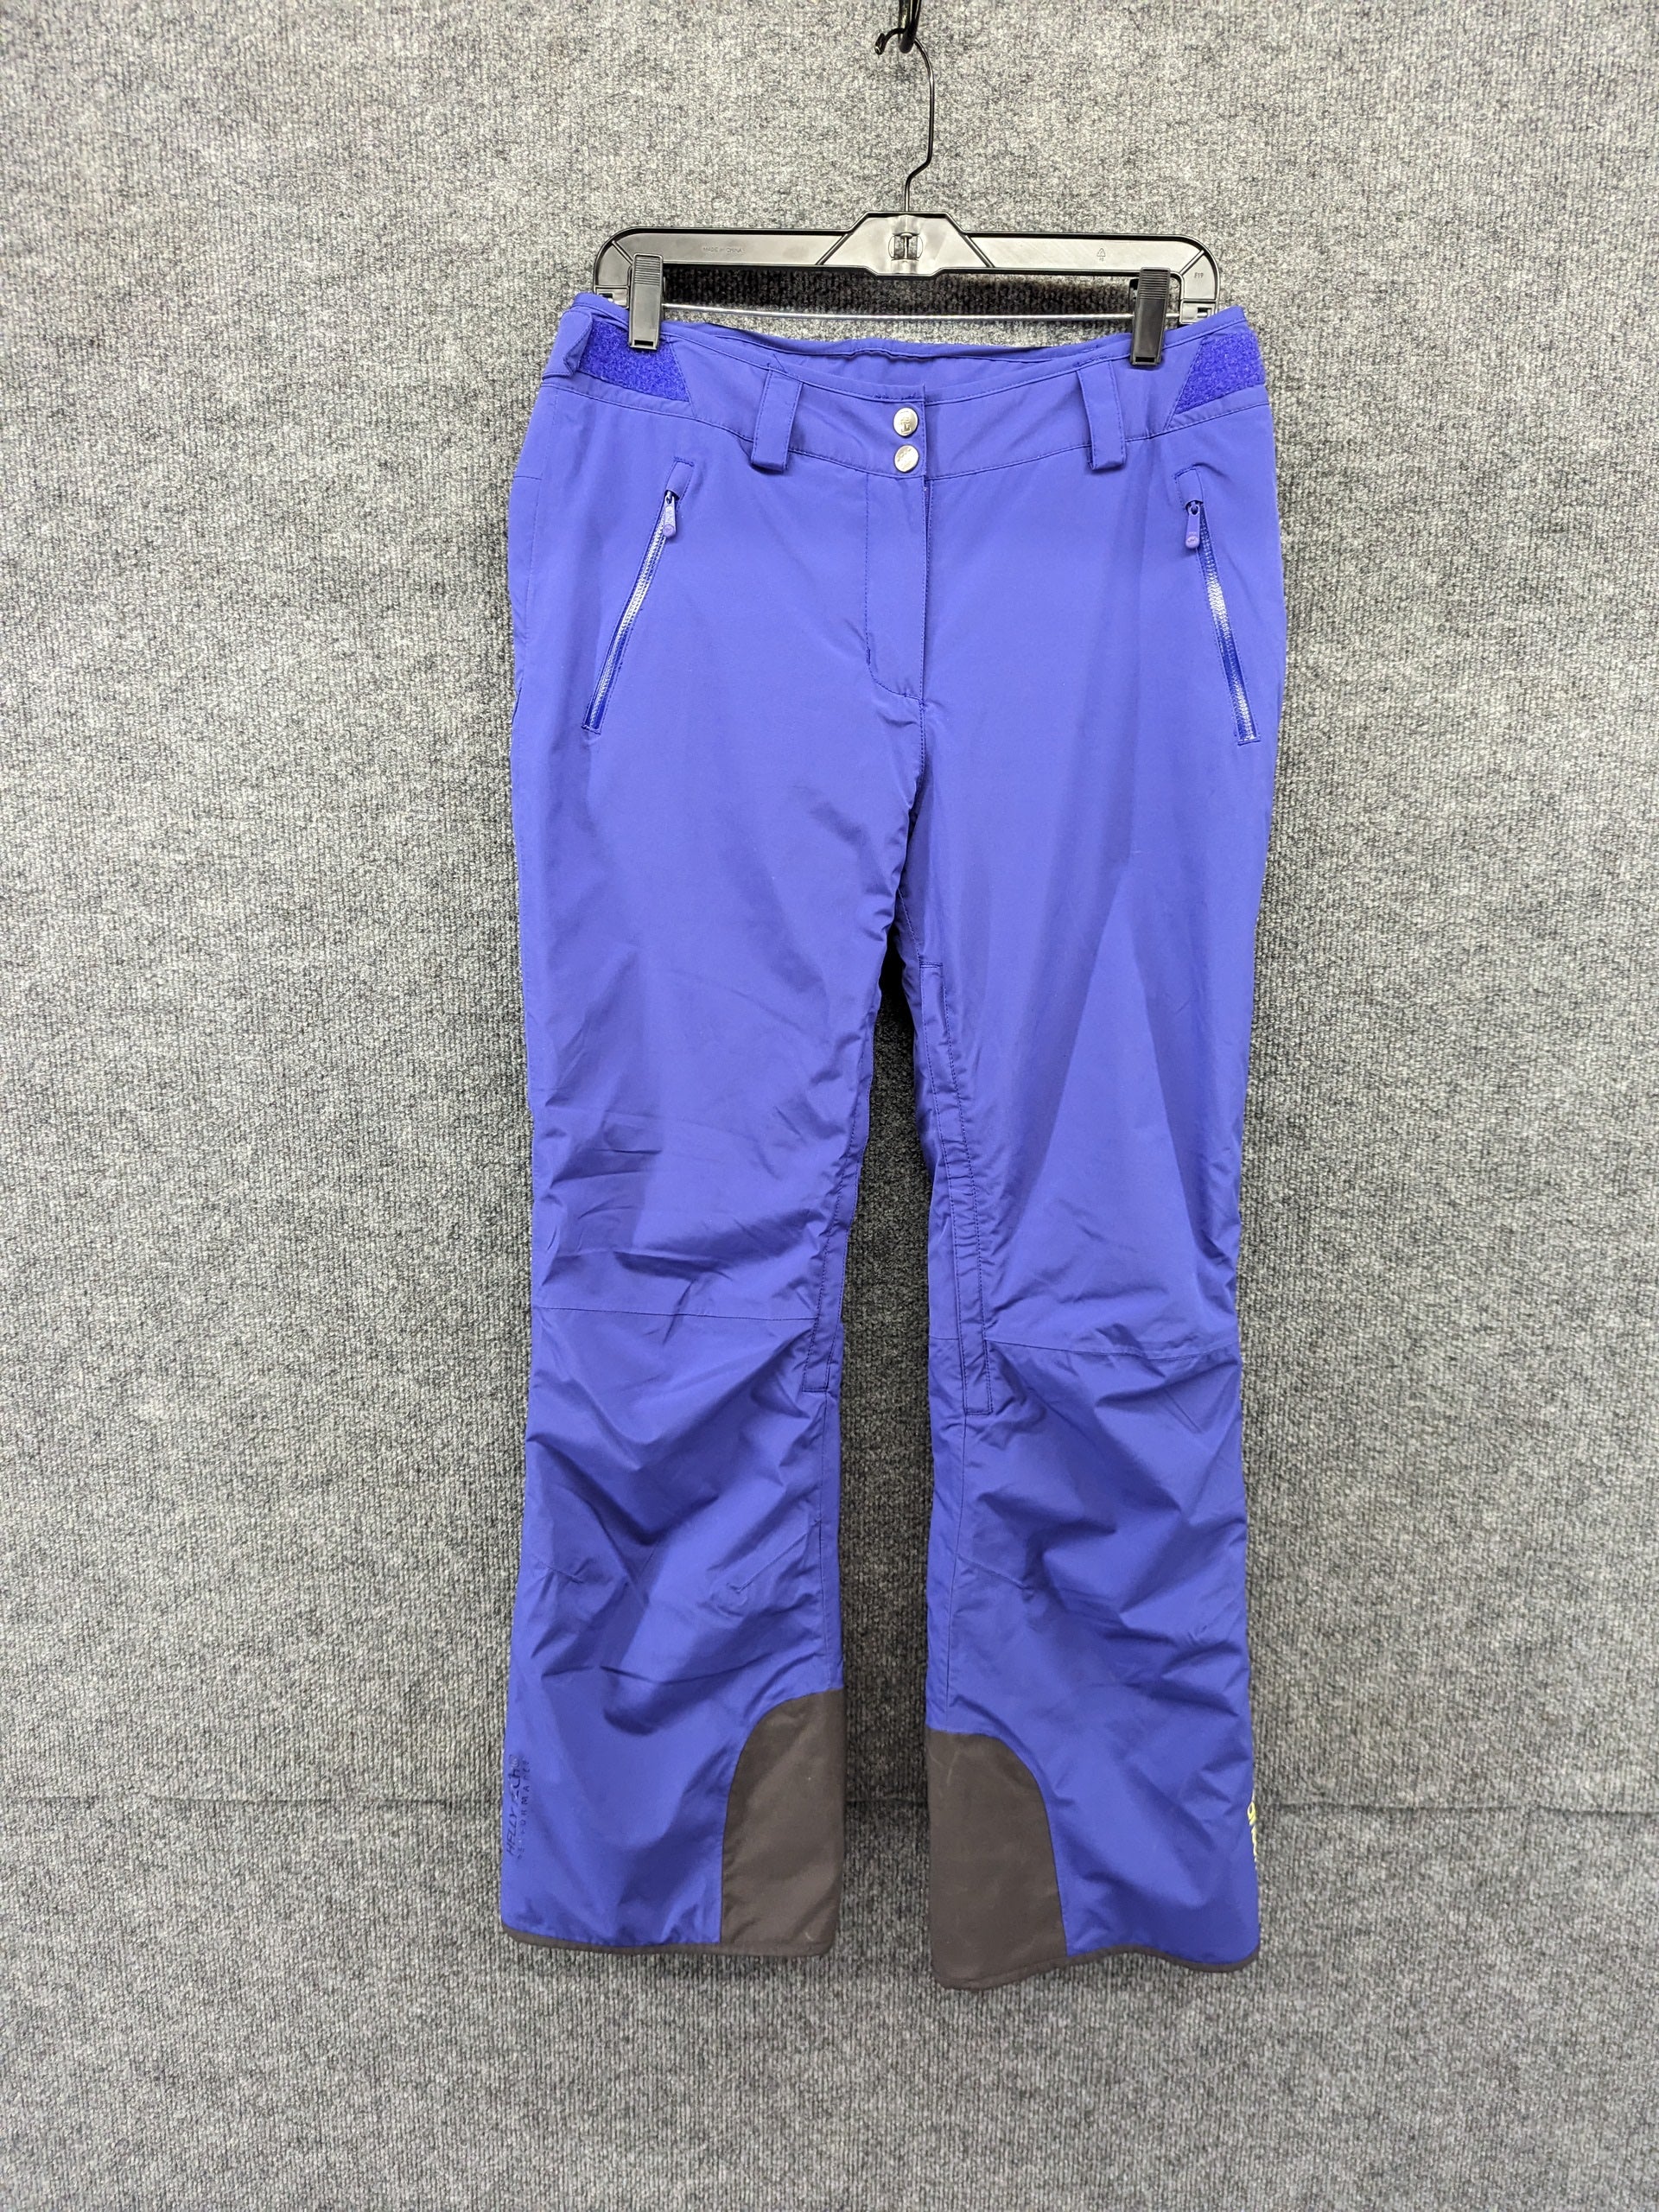 Helly Hansen Size W Medium Women's Ski Pants – Rambleraven Gear Trader